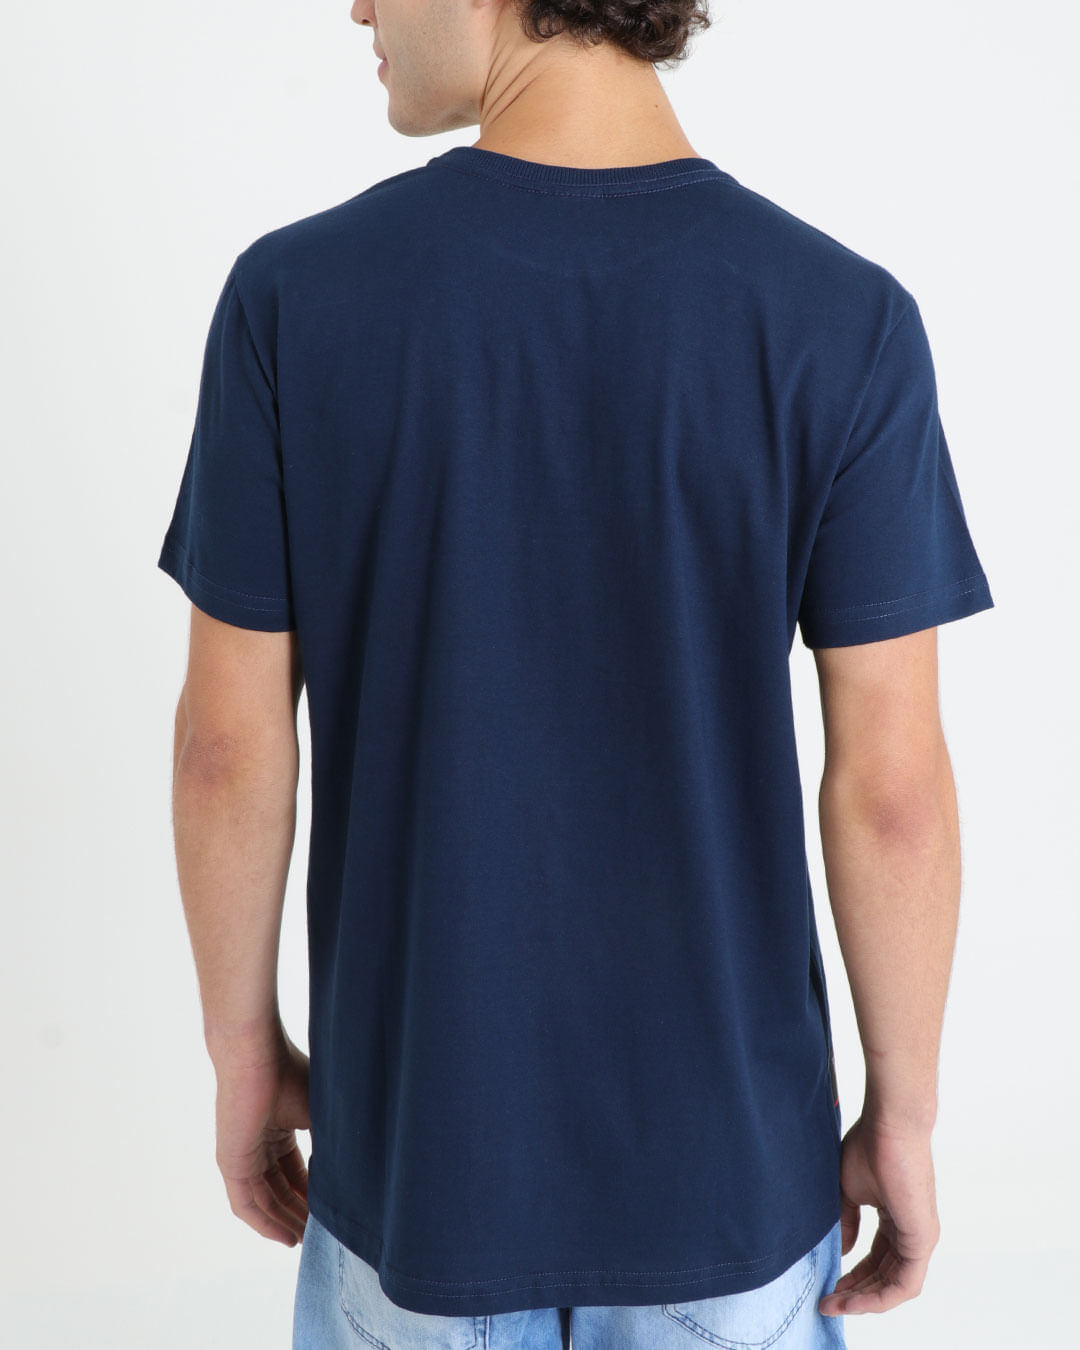 Camiseta-Manga-Curta-Estampa-Ecko-Unlimited-Azul-Marinho